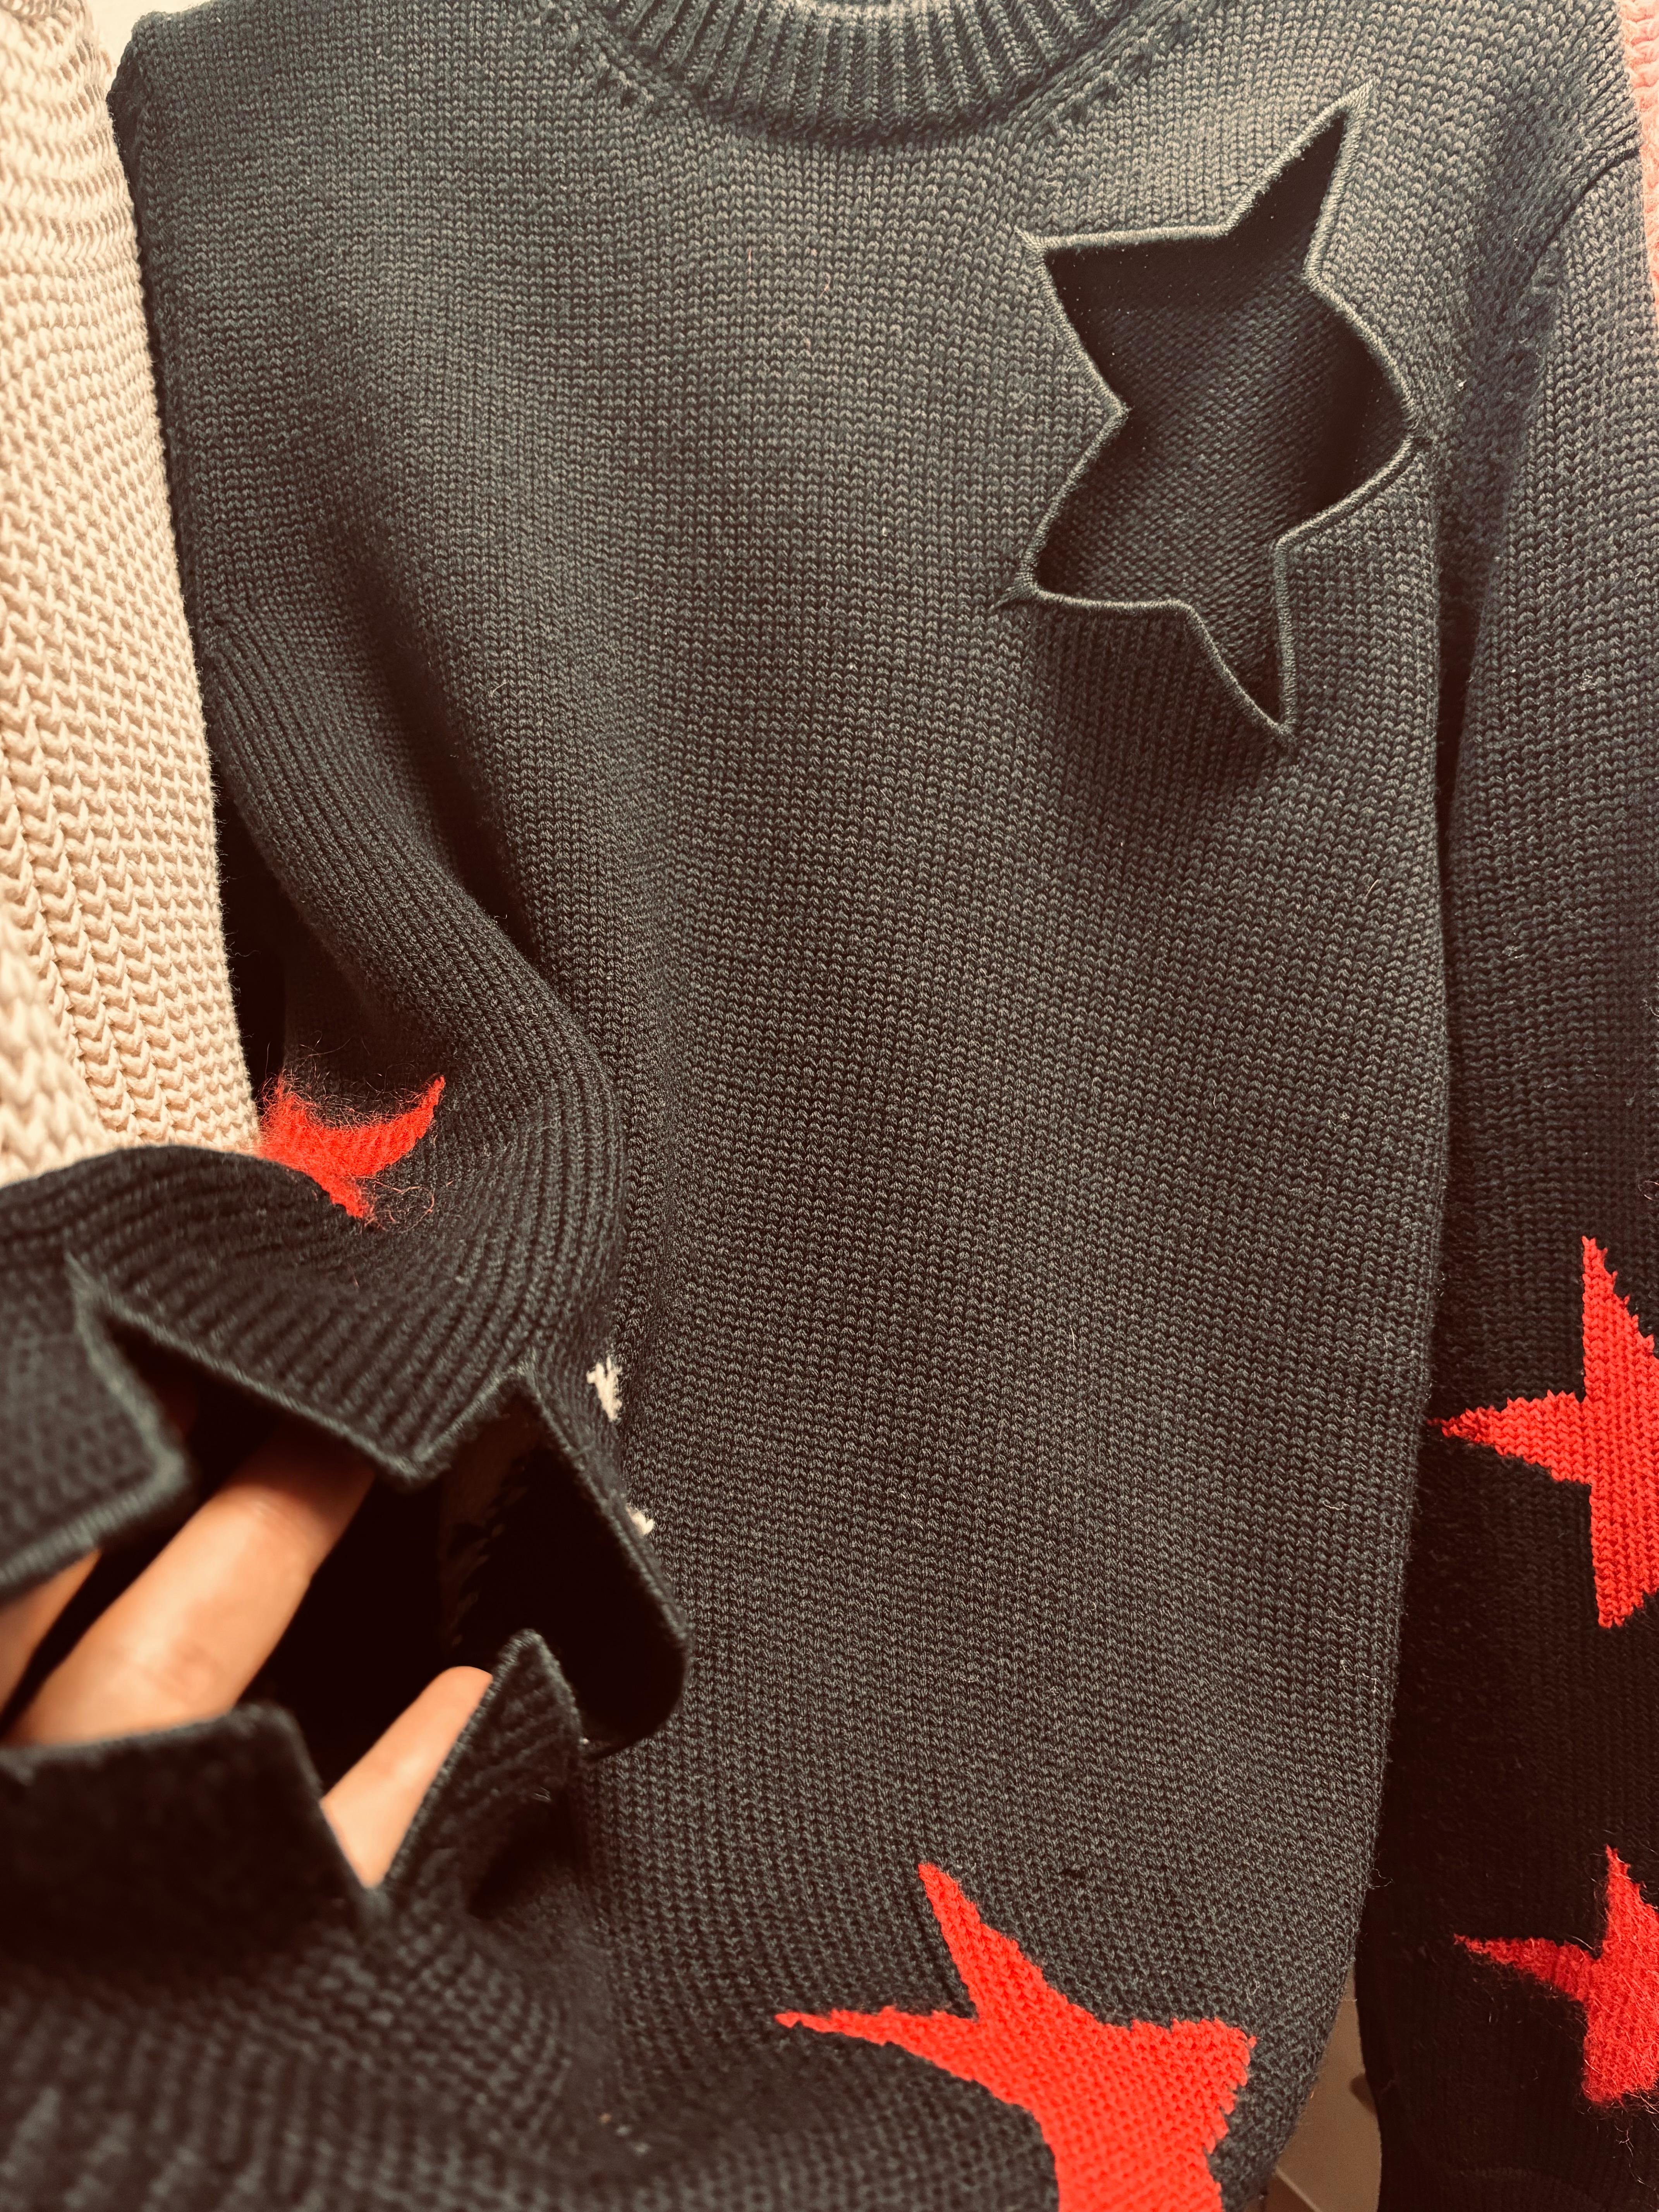 Givenchy Paris Men Sweater AW17 Knit Stars Part Cut-out, Size S/M, S530 For Sale 2